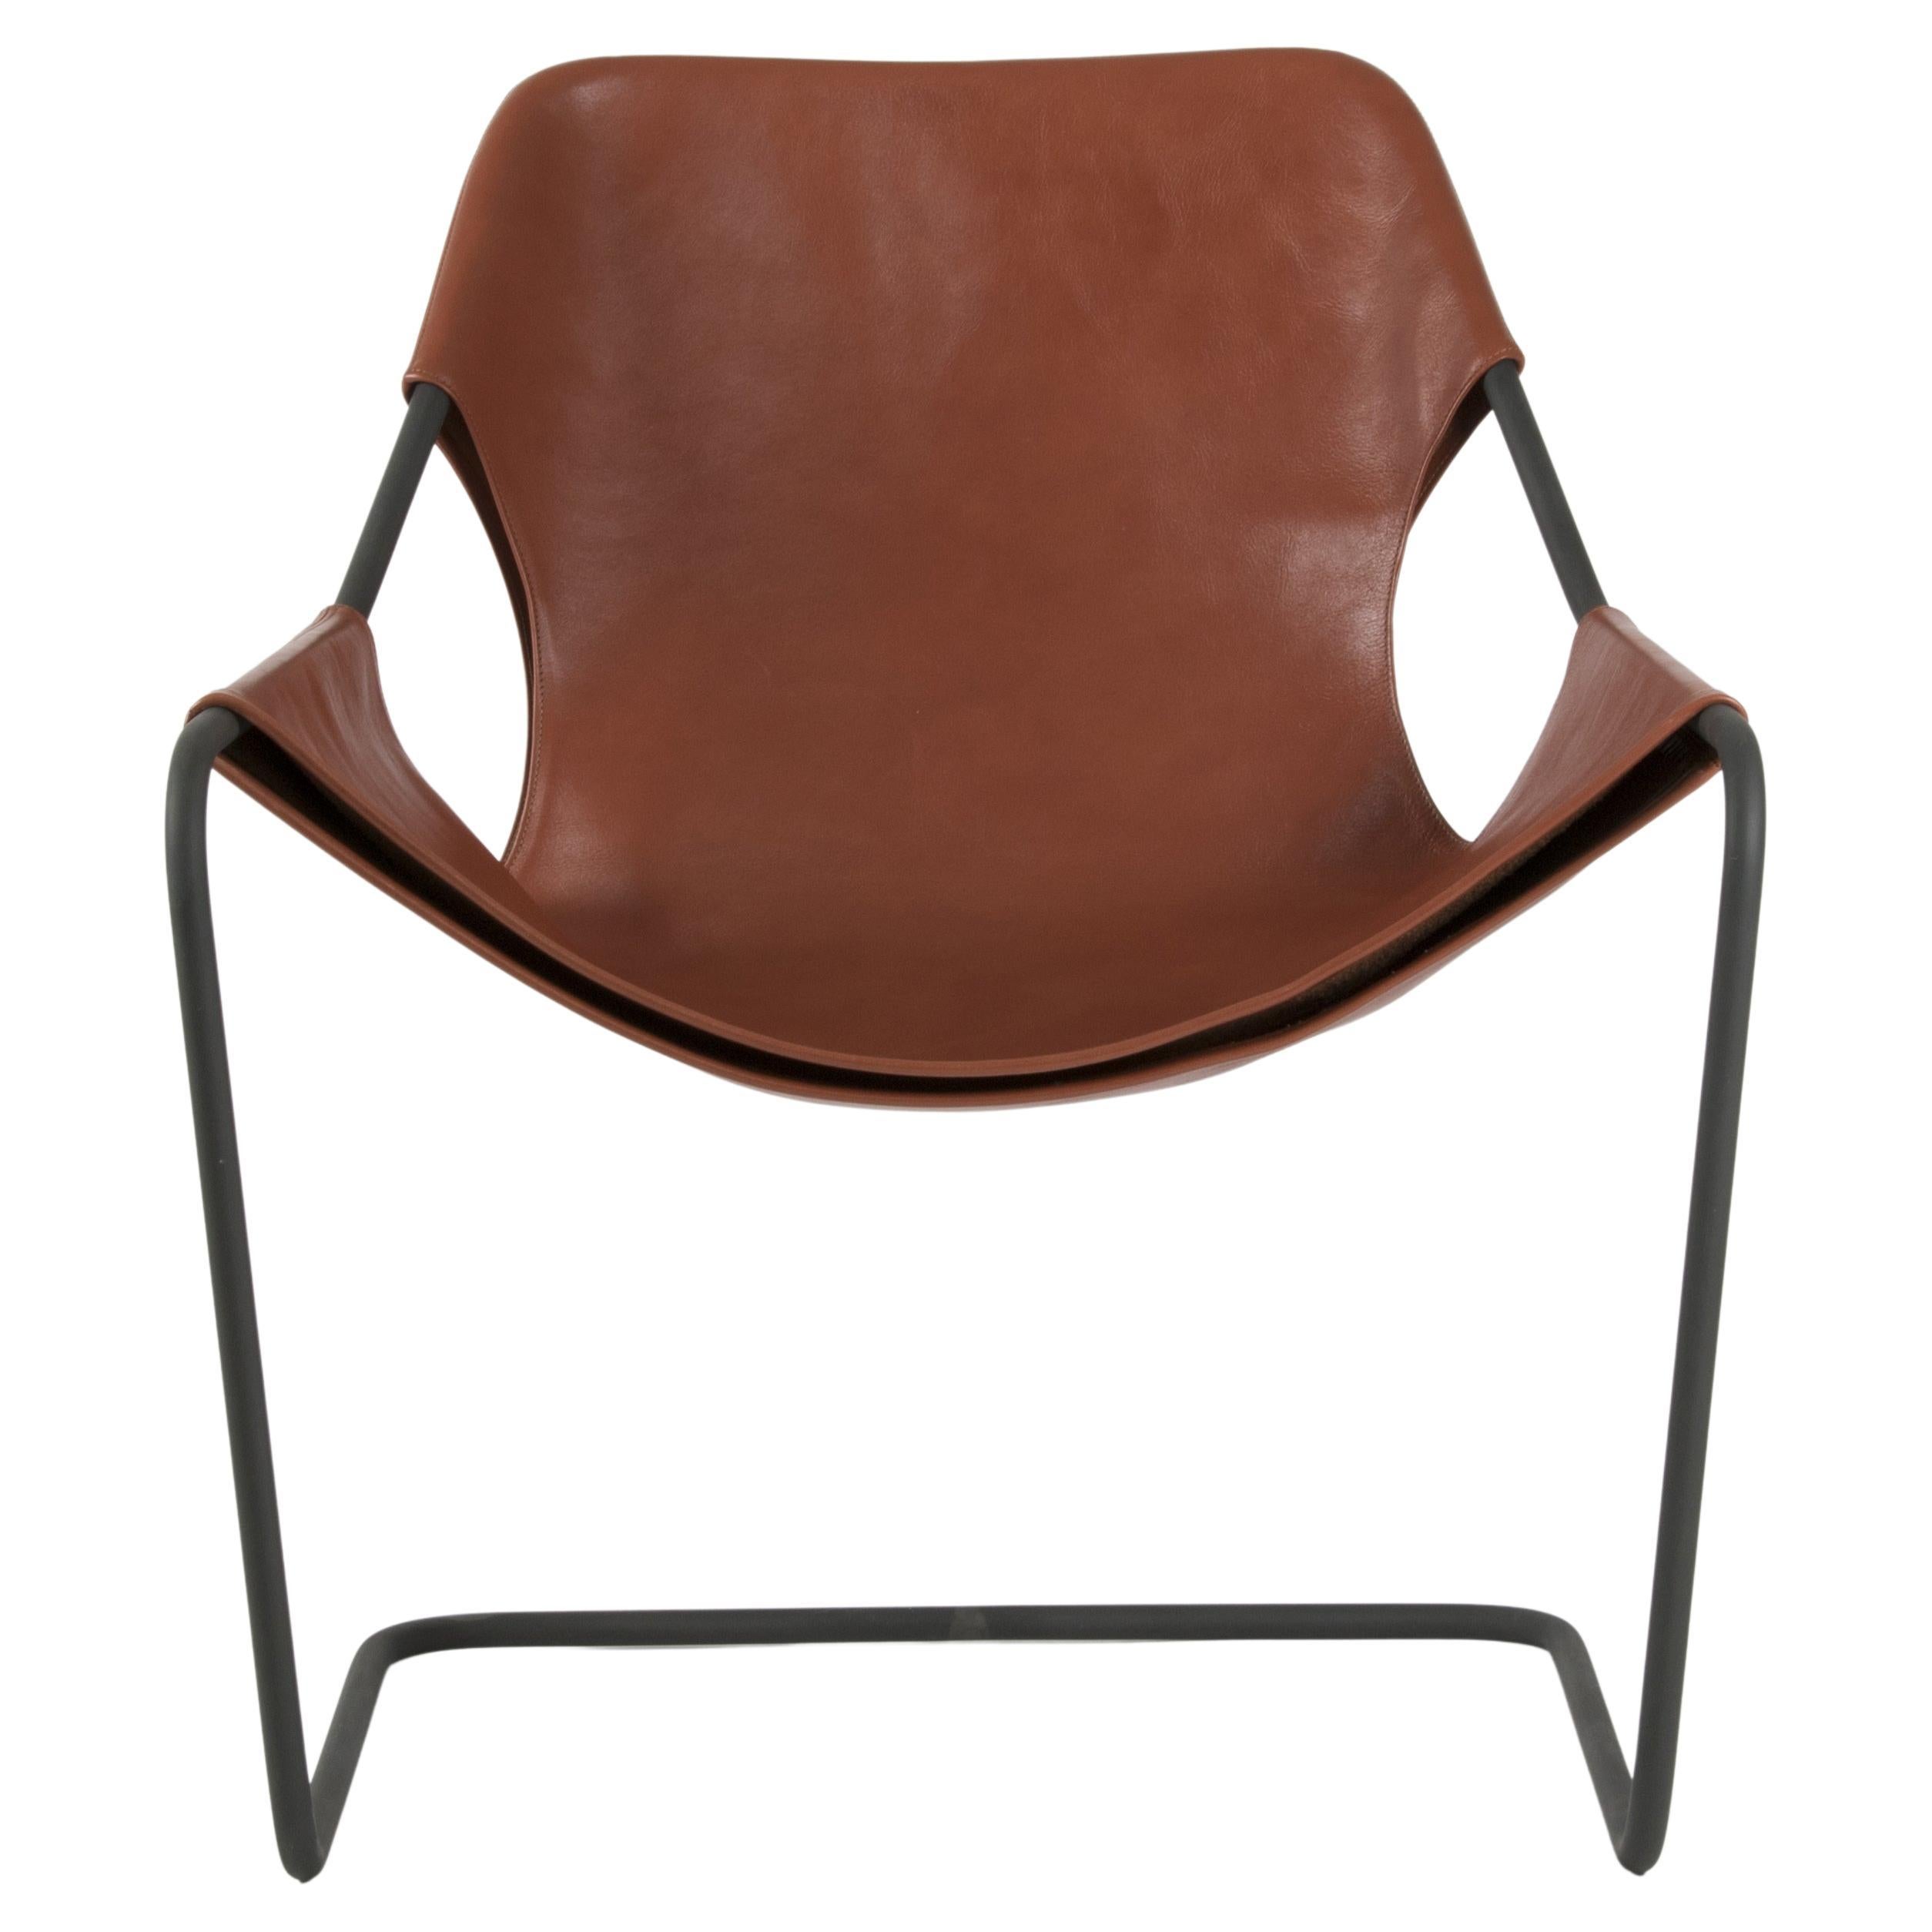 Paulistano Leather Chair by Objekto